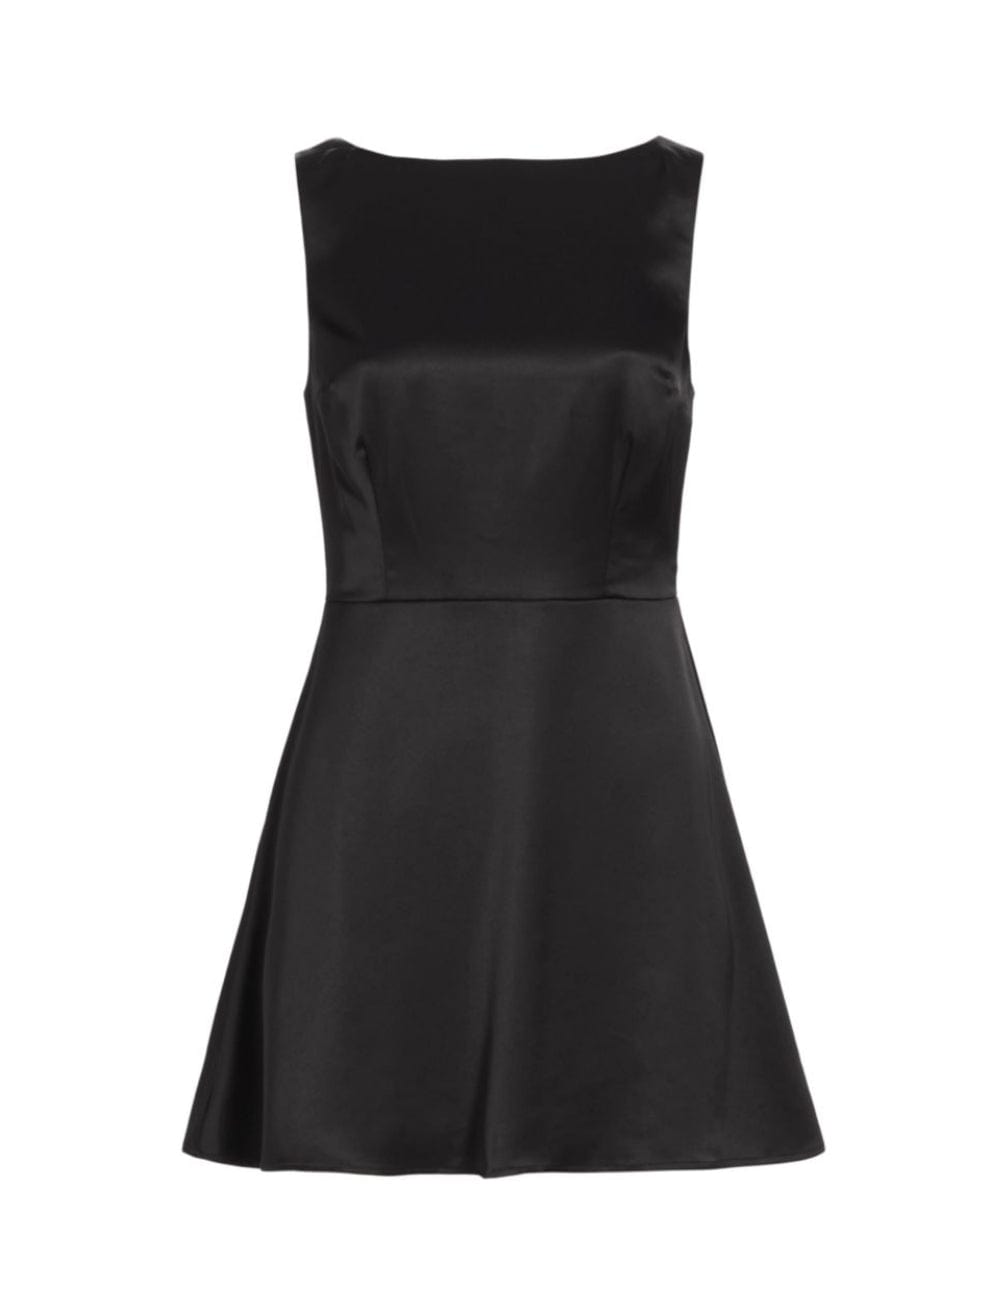 Zenni Dress in Black